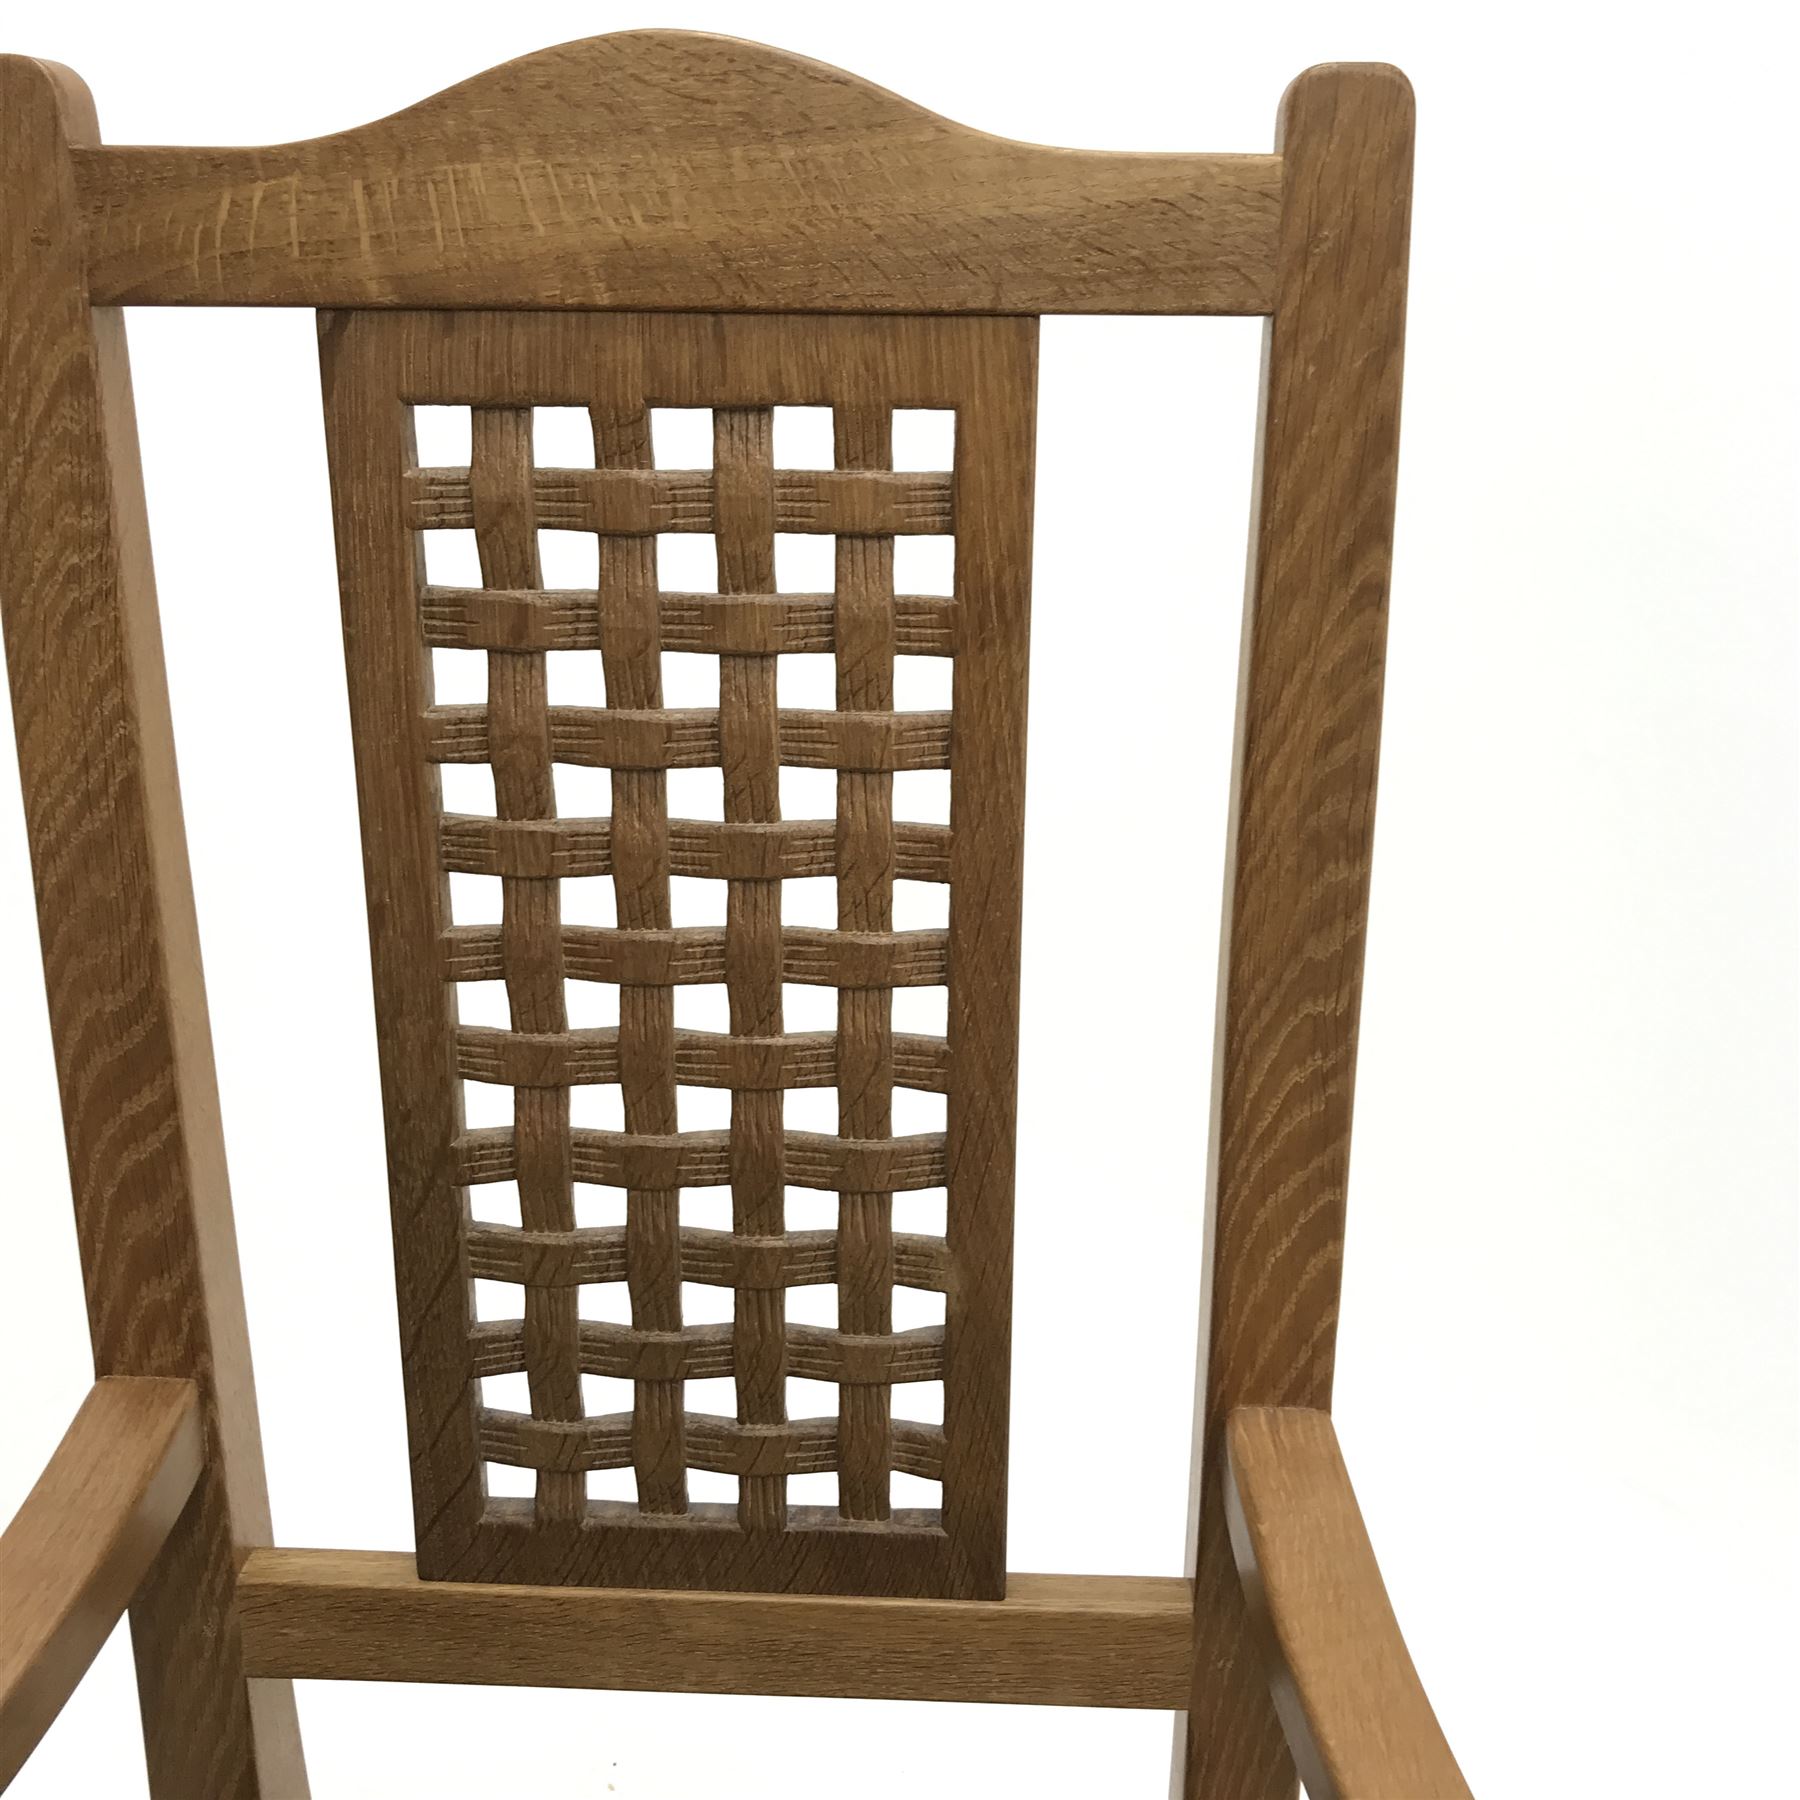 'Foxman' oak rocking chair - Image 3 of 6